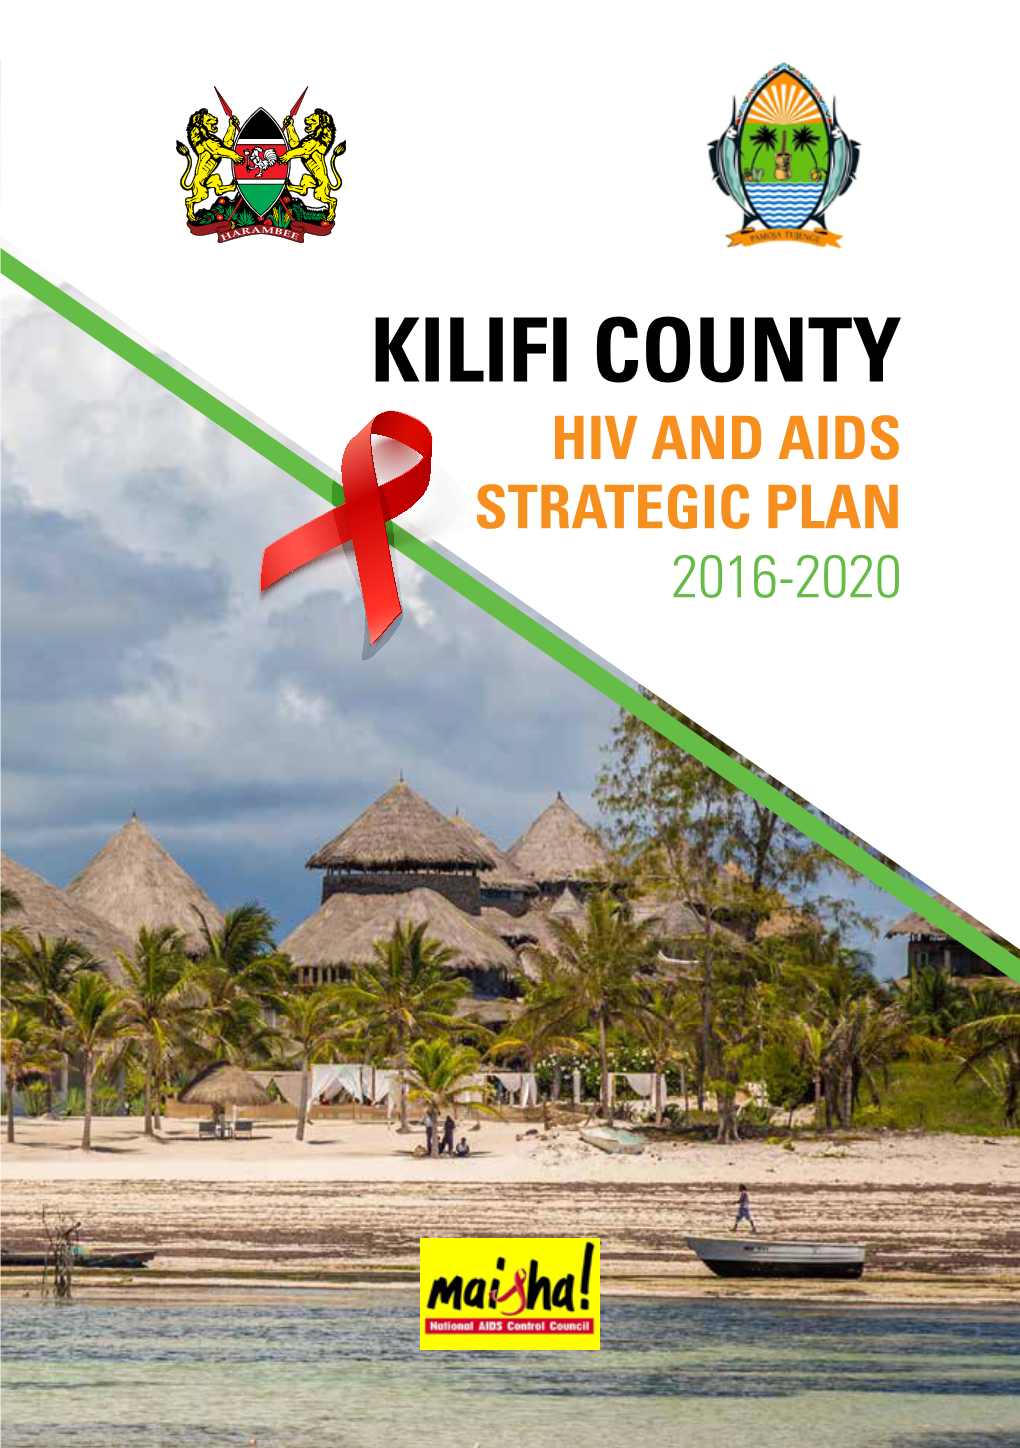 Kilifi County Hiv and Aids Strategic Plan 2016-2020